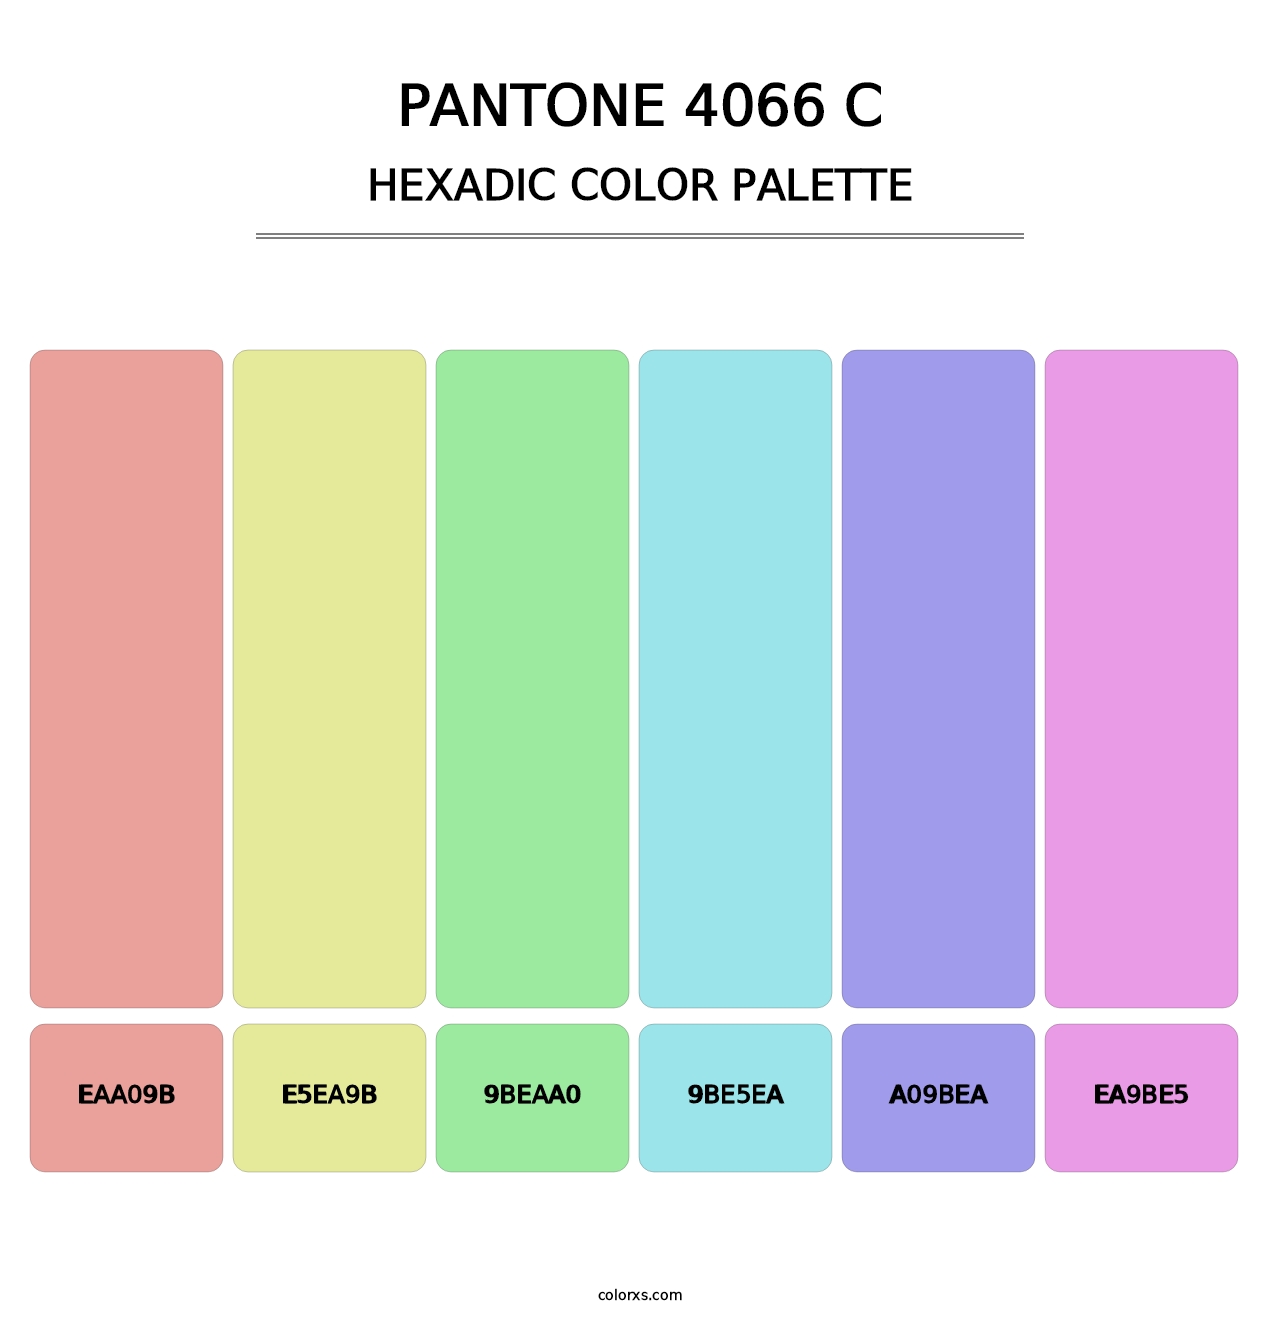 PANTONE 4066 C - Hexadic Color Palette